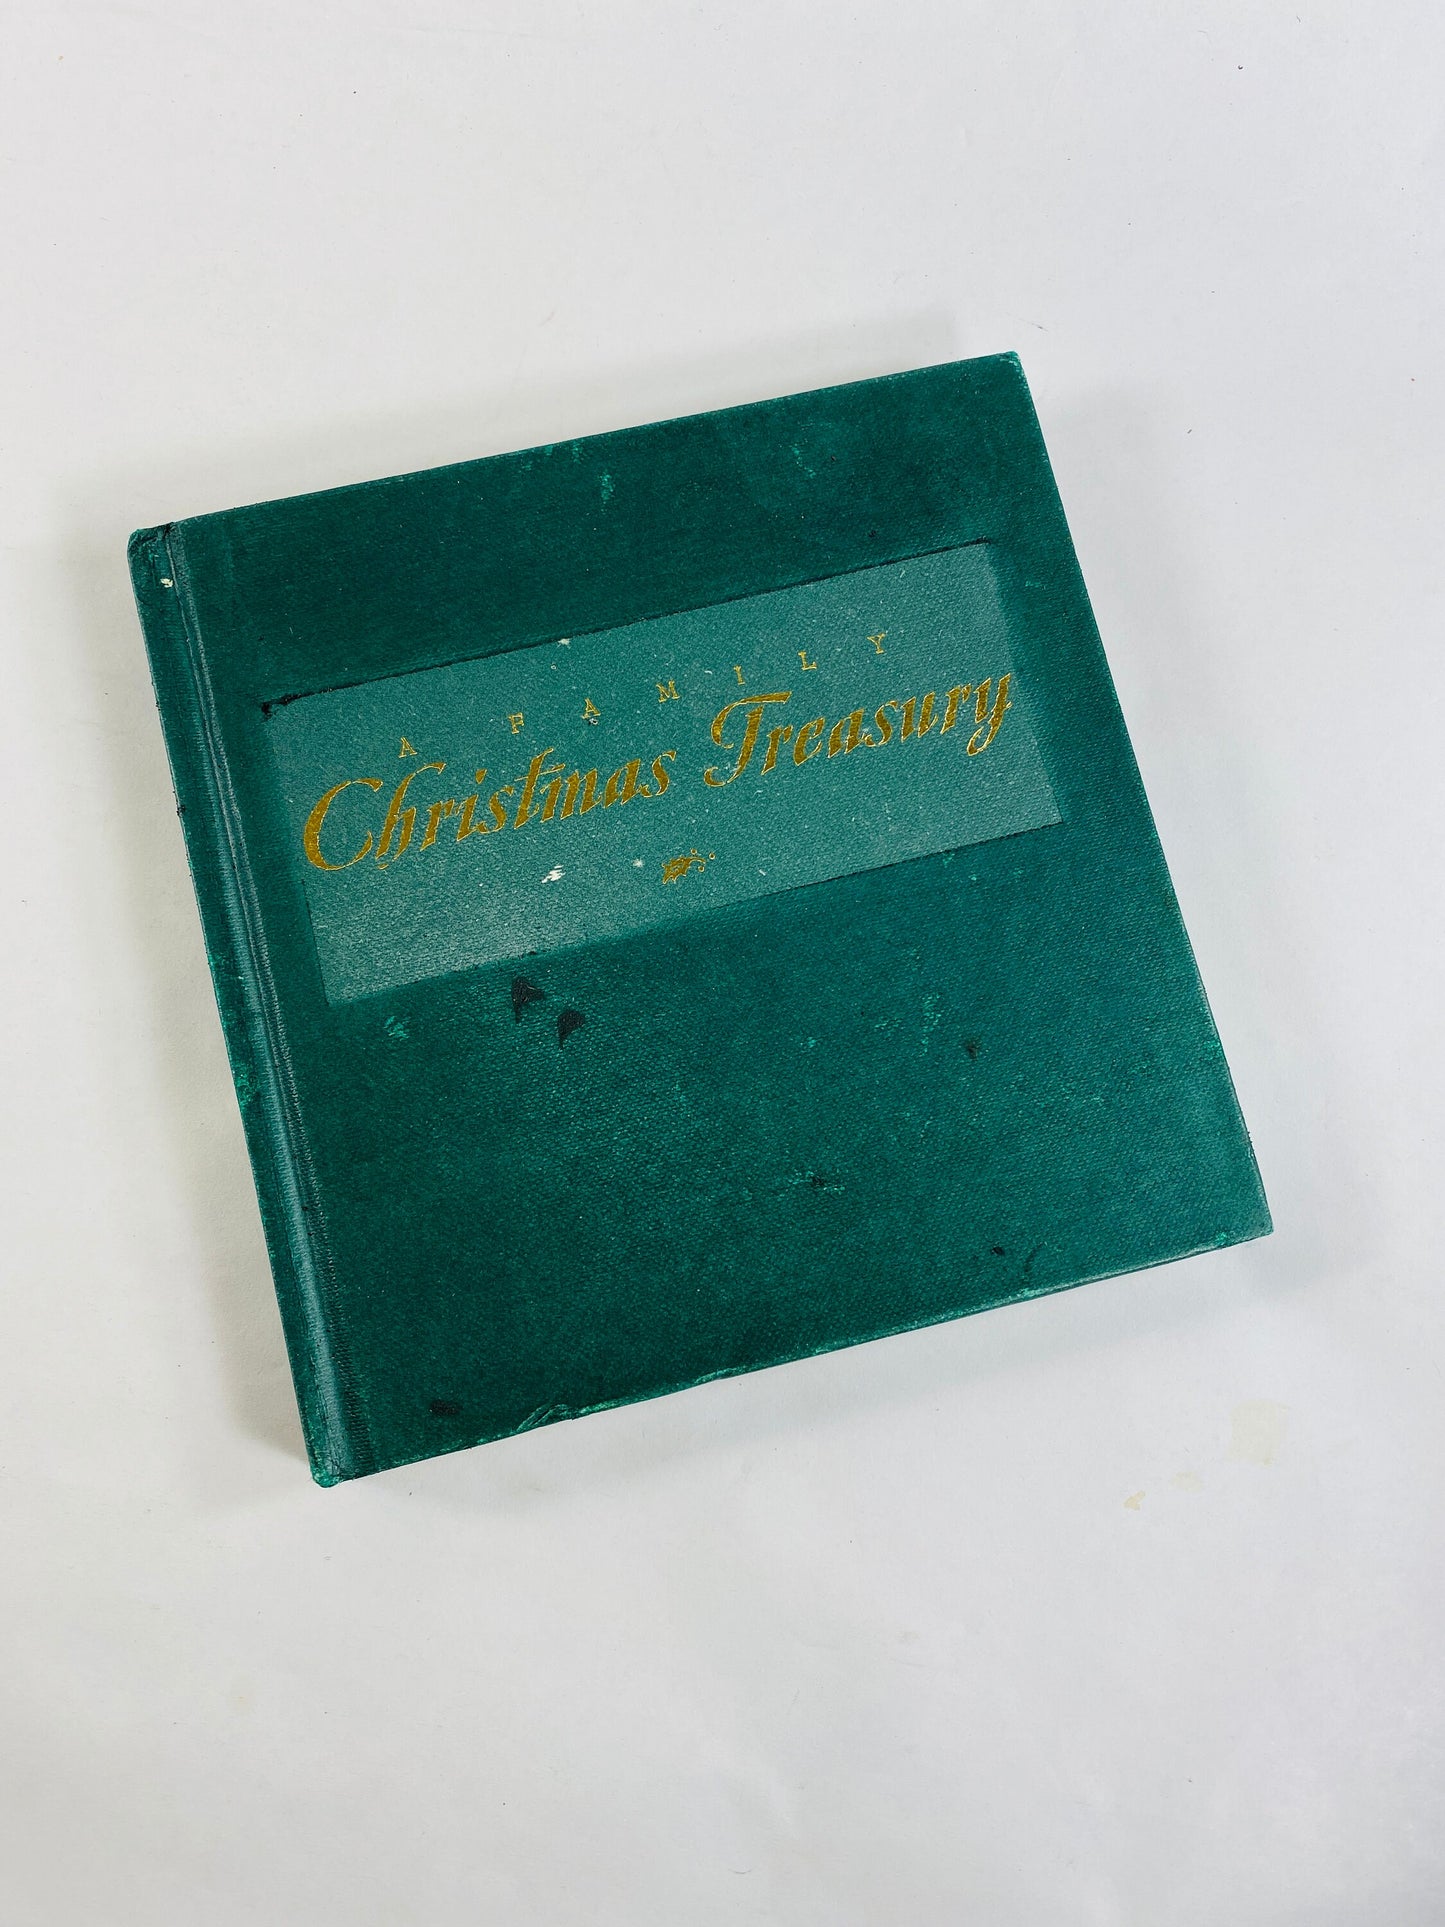 Family Christmas Treasury vintage book by Adrian Rogers illustrated by Thomas Kinkade small green cloth holiday decor Christian Jesus virtue